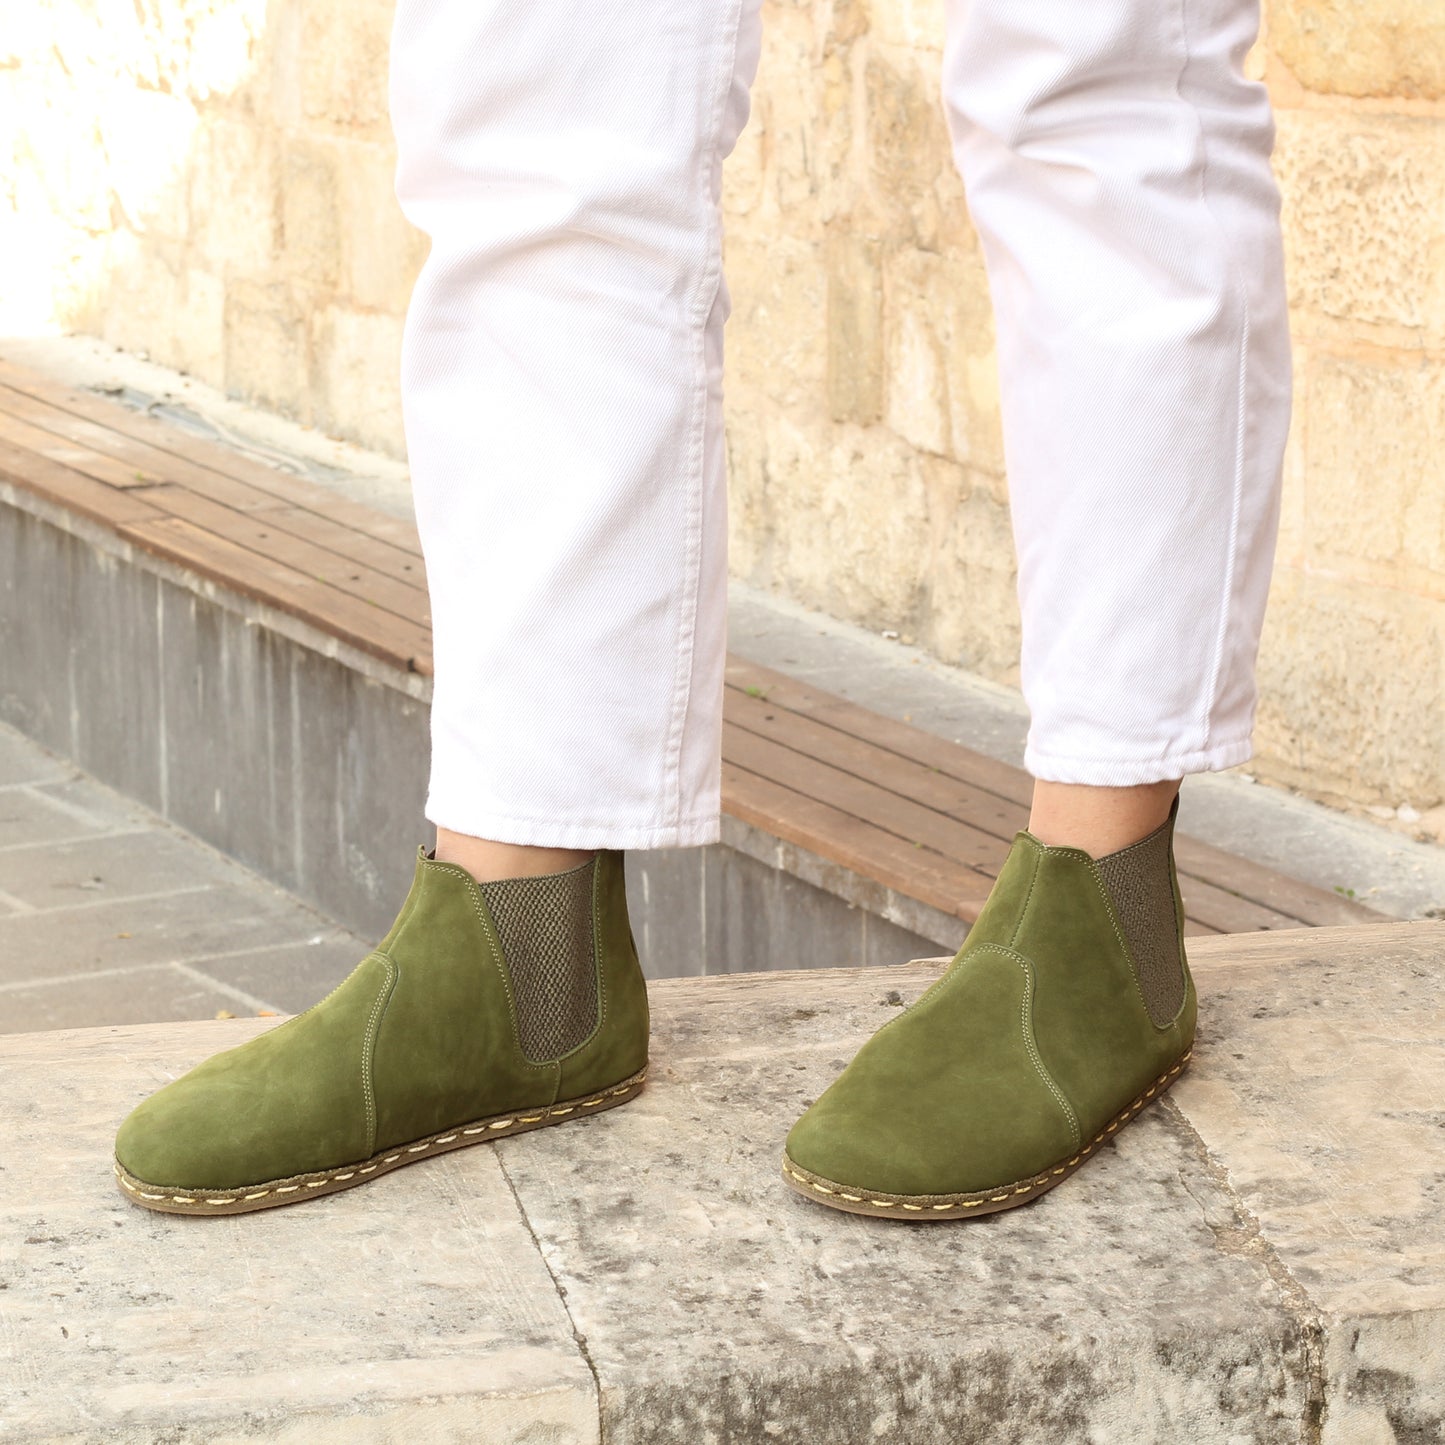 Handmade Chelsea Barefoot Leather Boots for Women - Earthing & Grounding Genuine Green Nubuck Boot